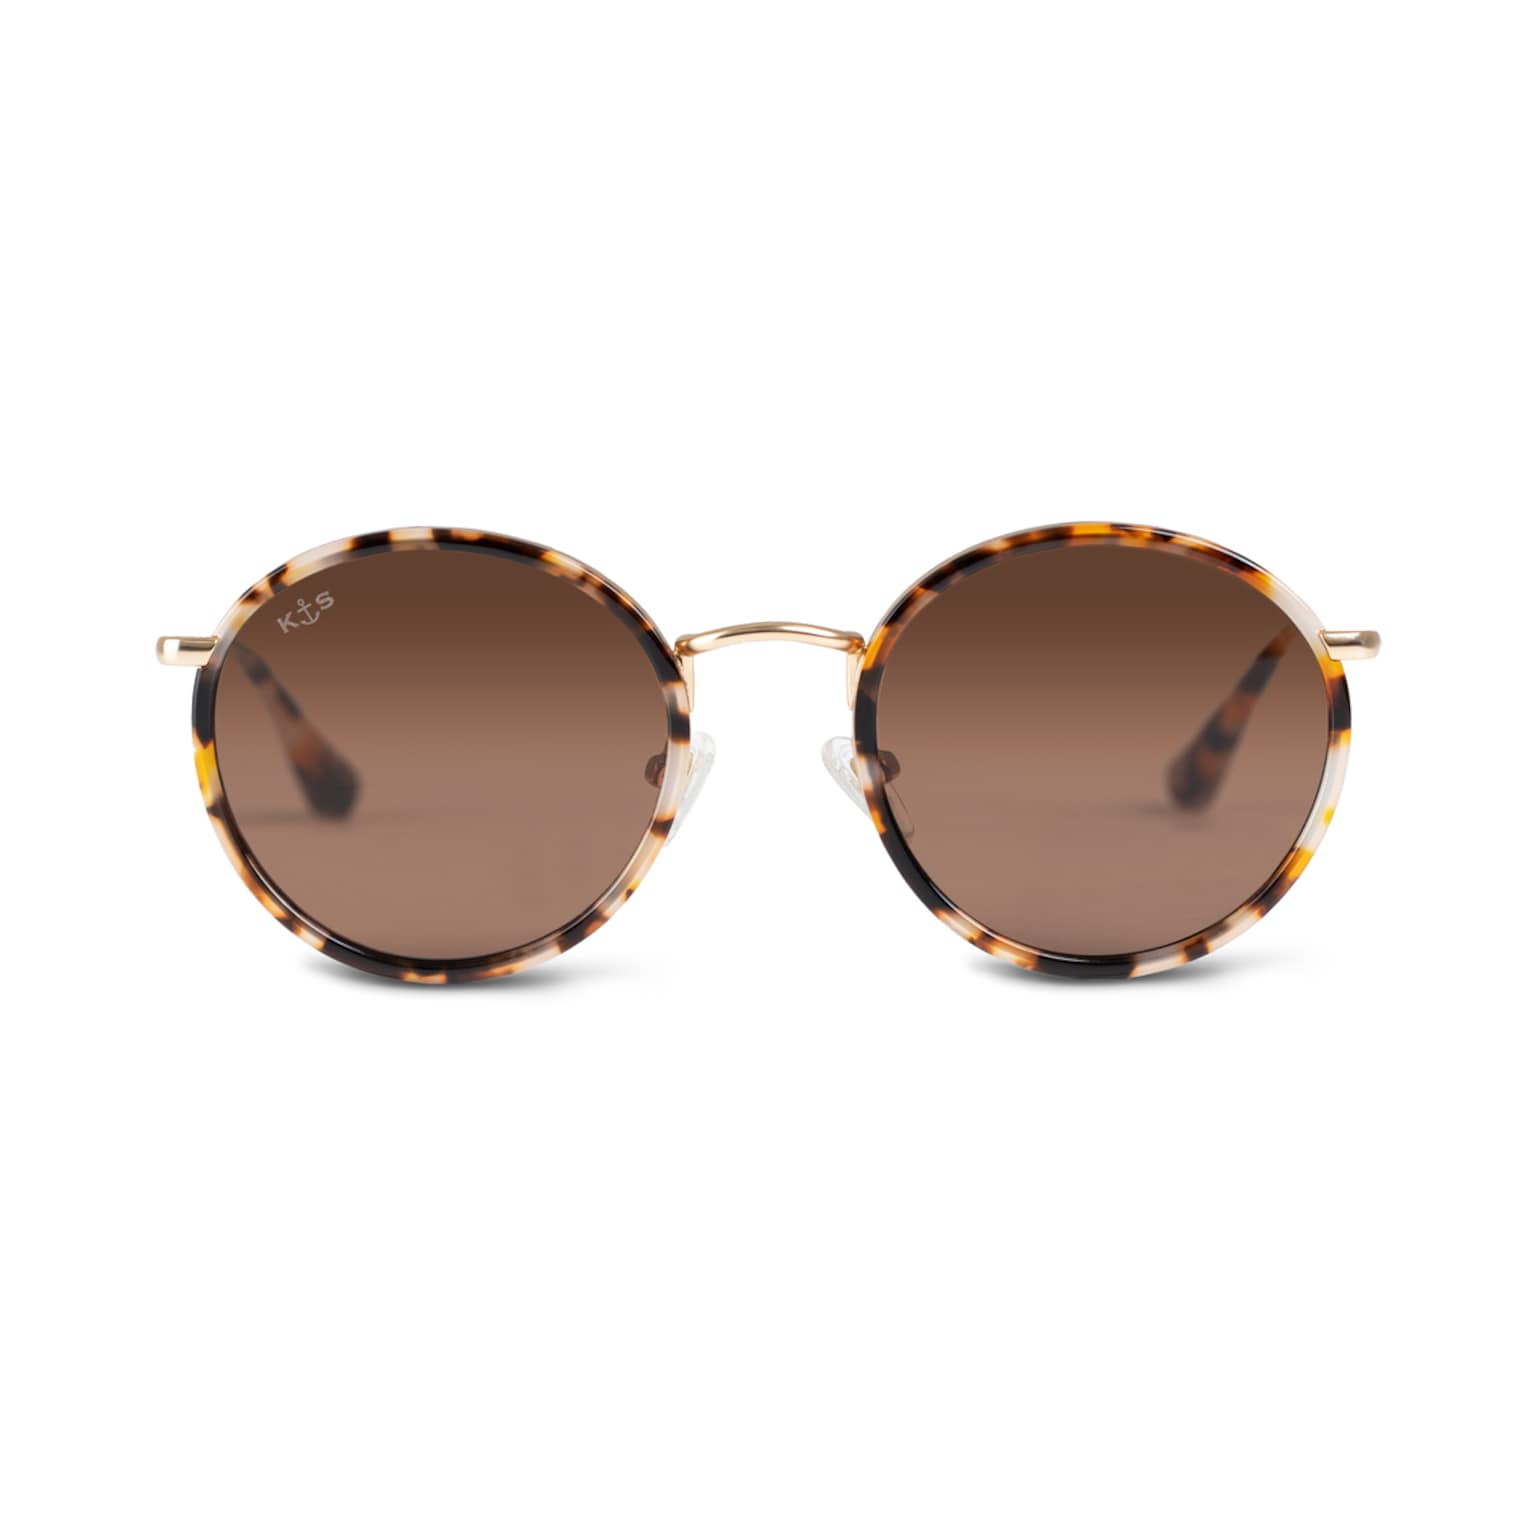 Amsterdam Desert Speckled Brown Sunglasses - Kapten & Son - South Africa